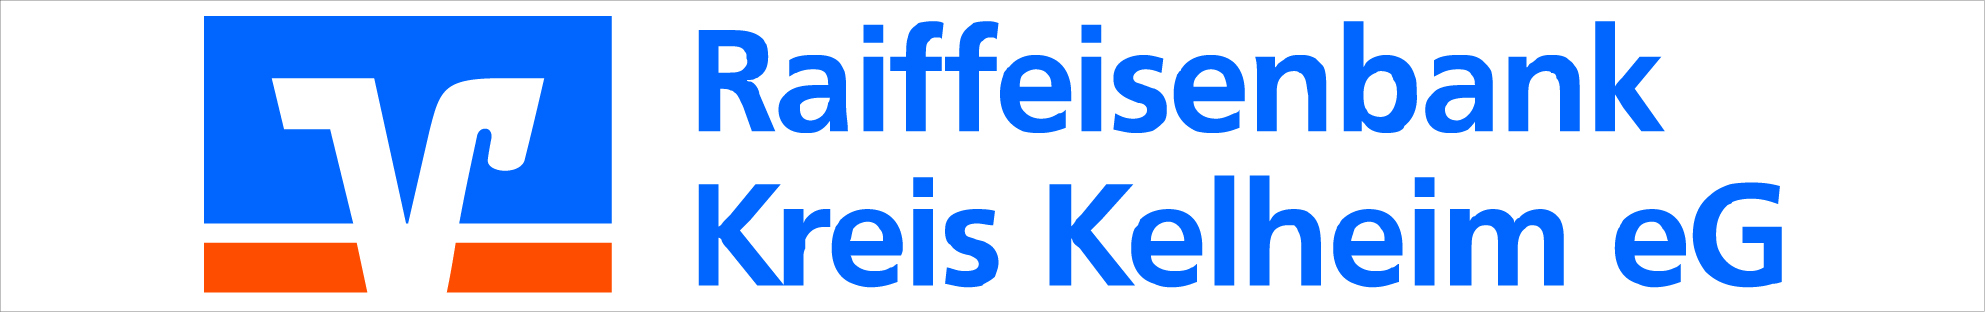 Logo_Raiffeisen_2020_neu.jpg